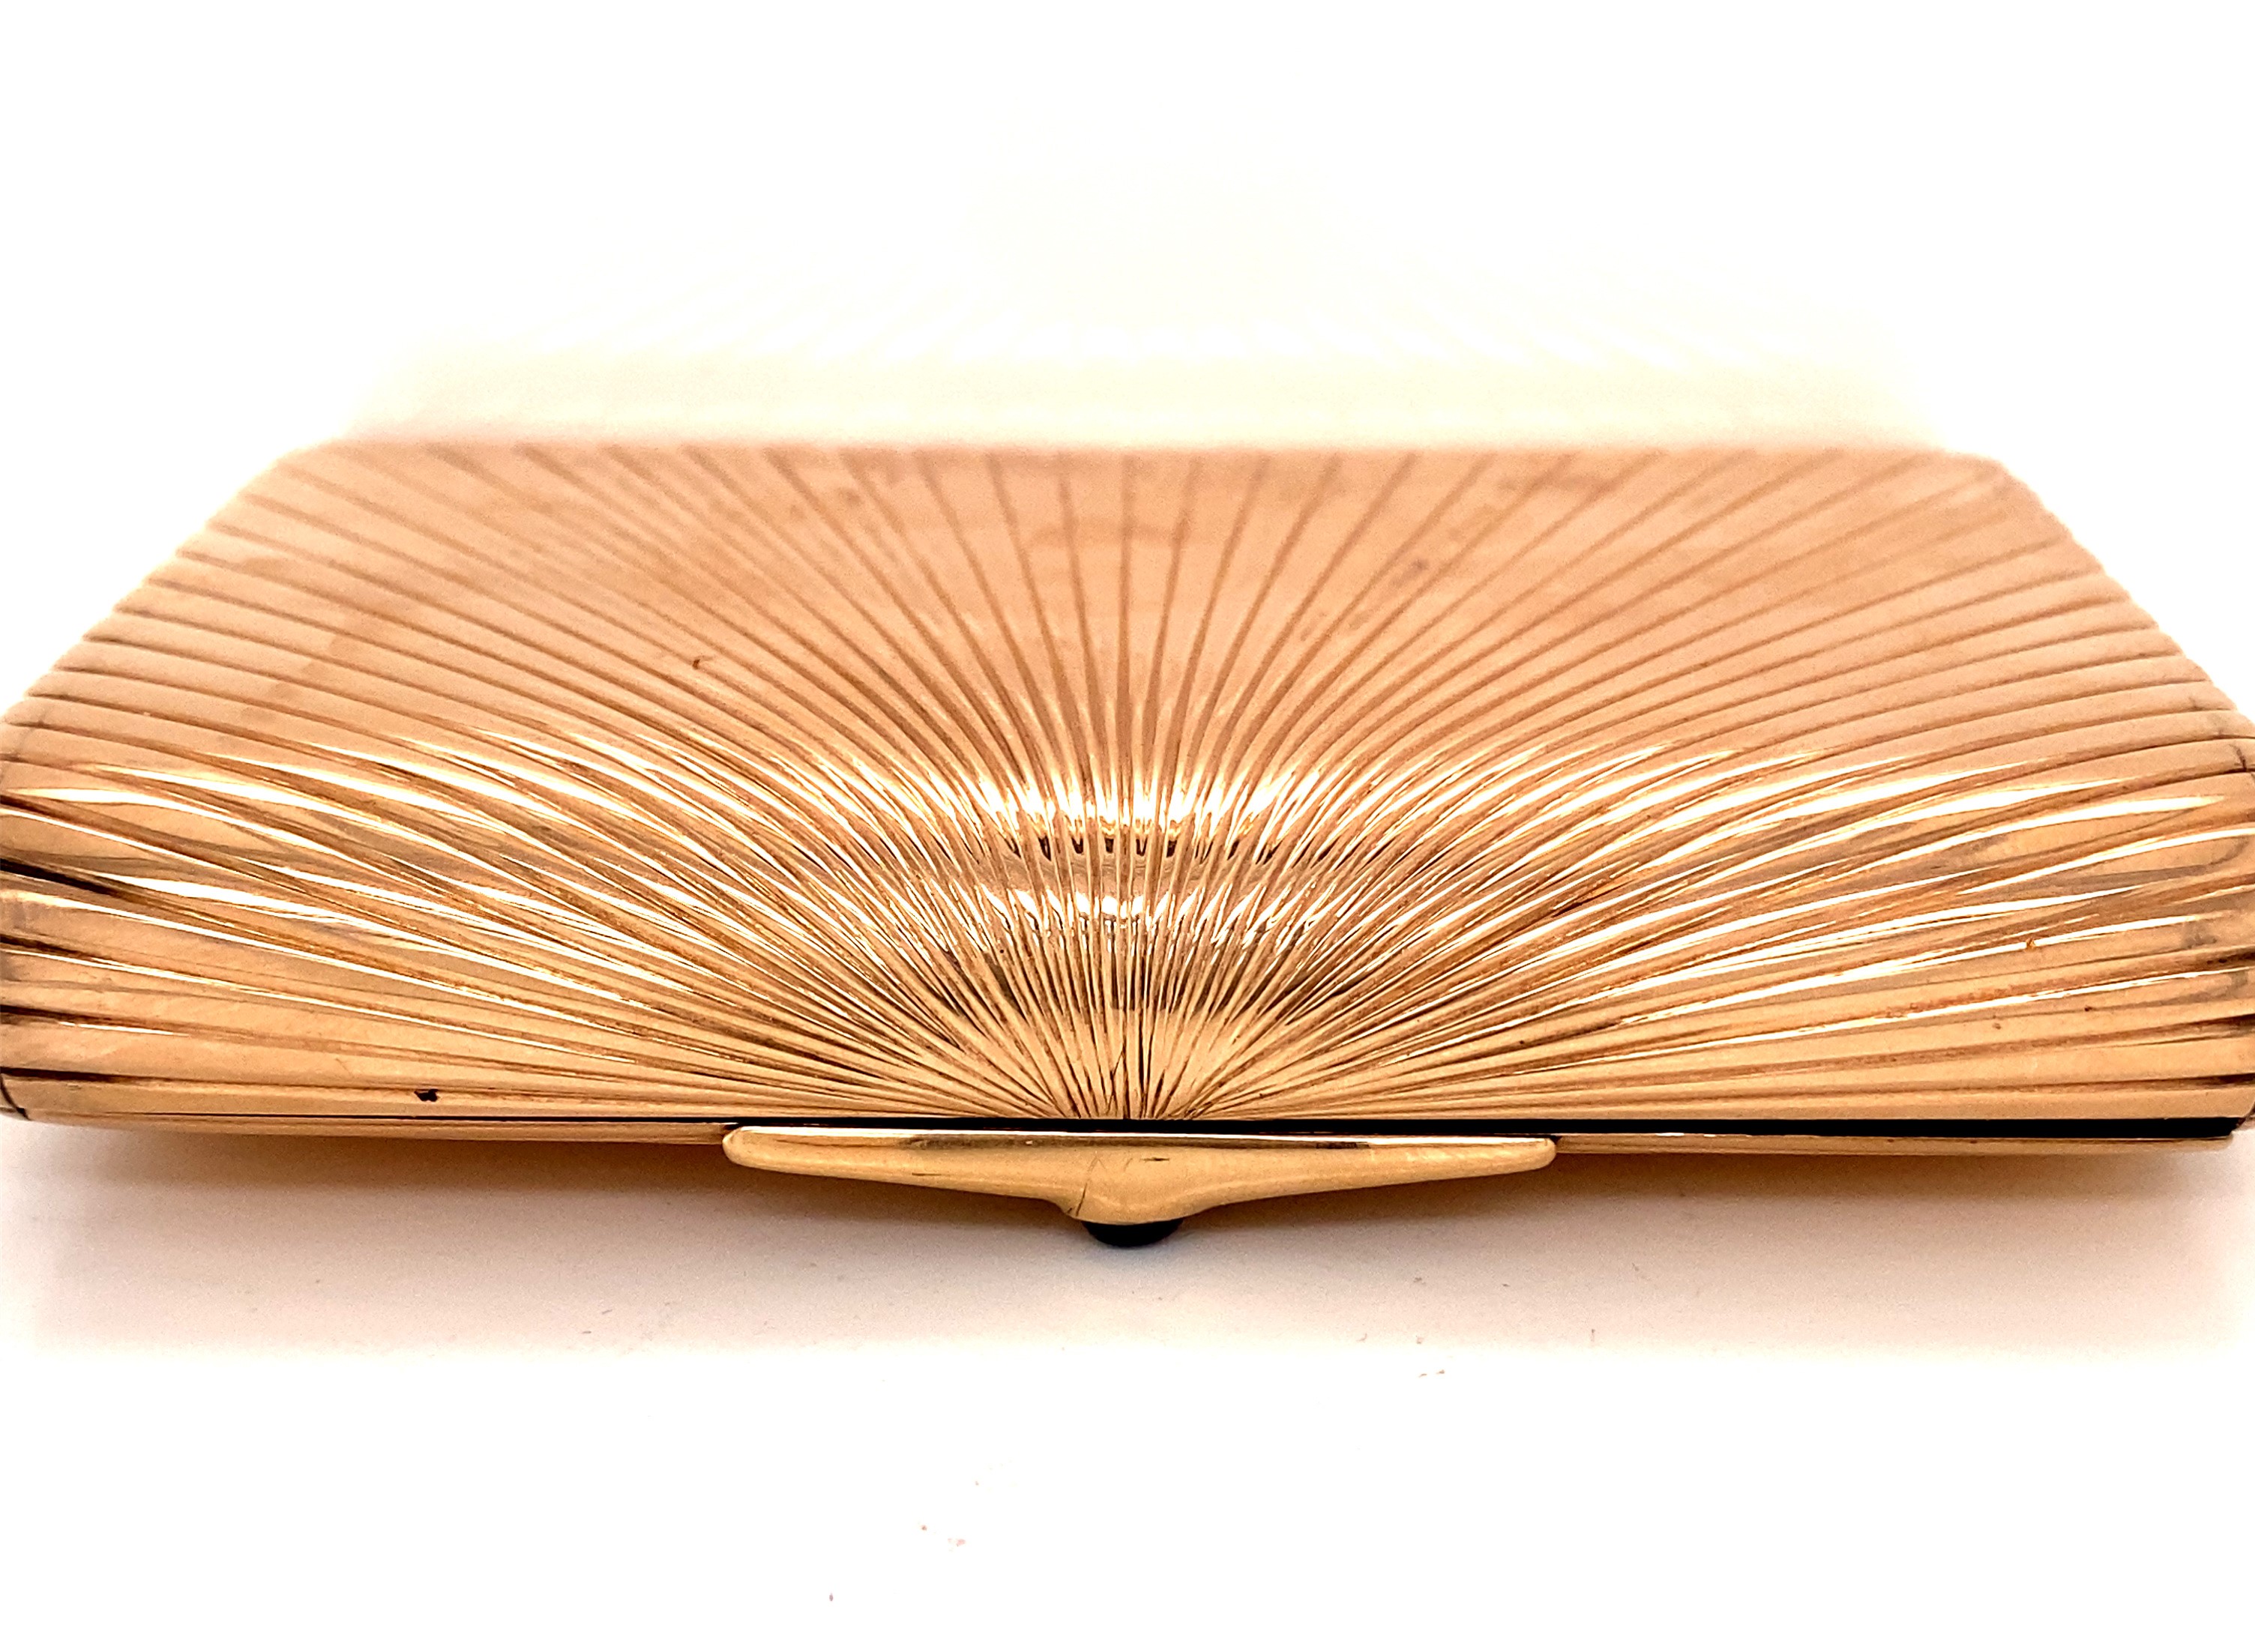 Gold Faberge Cigarette Case - Image 5 of 7